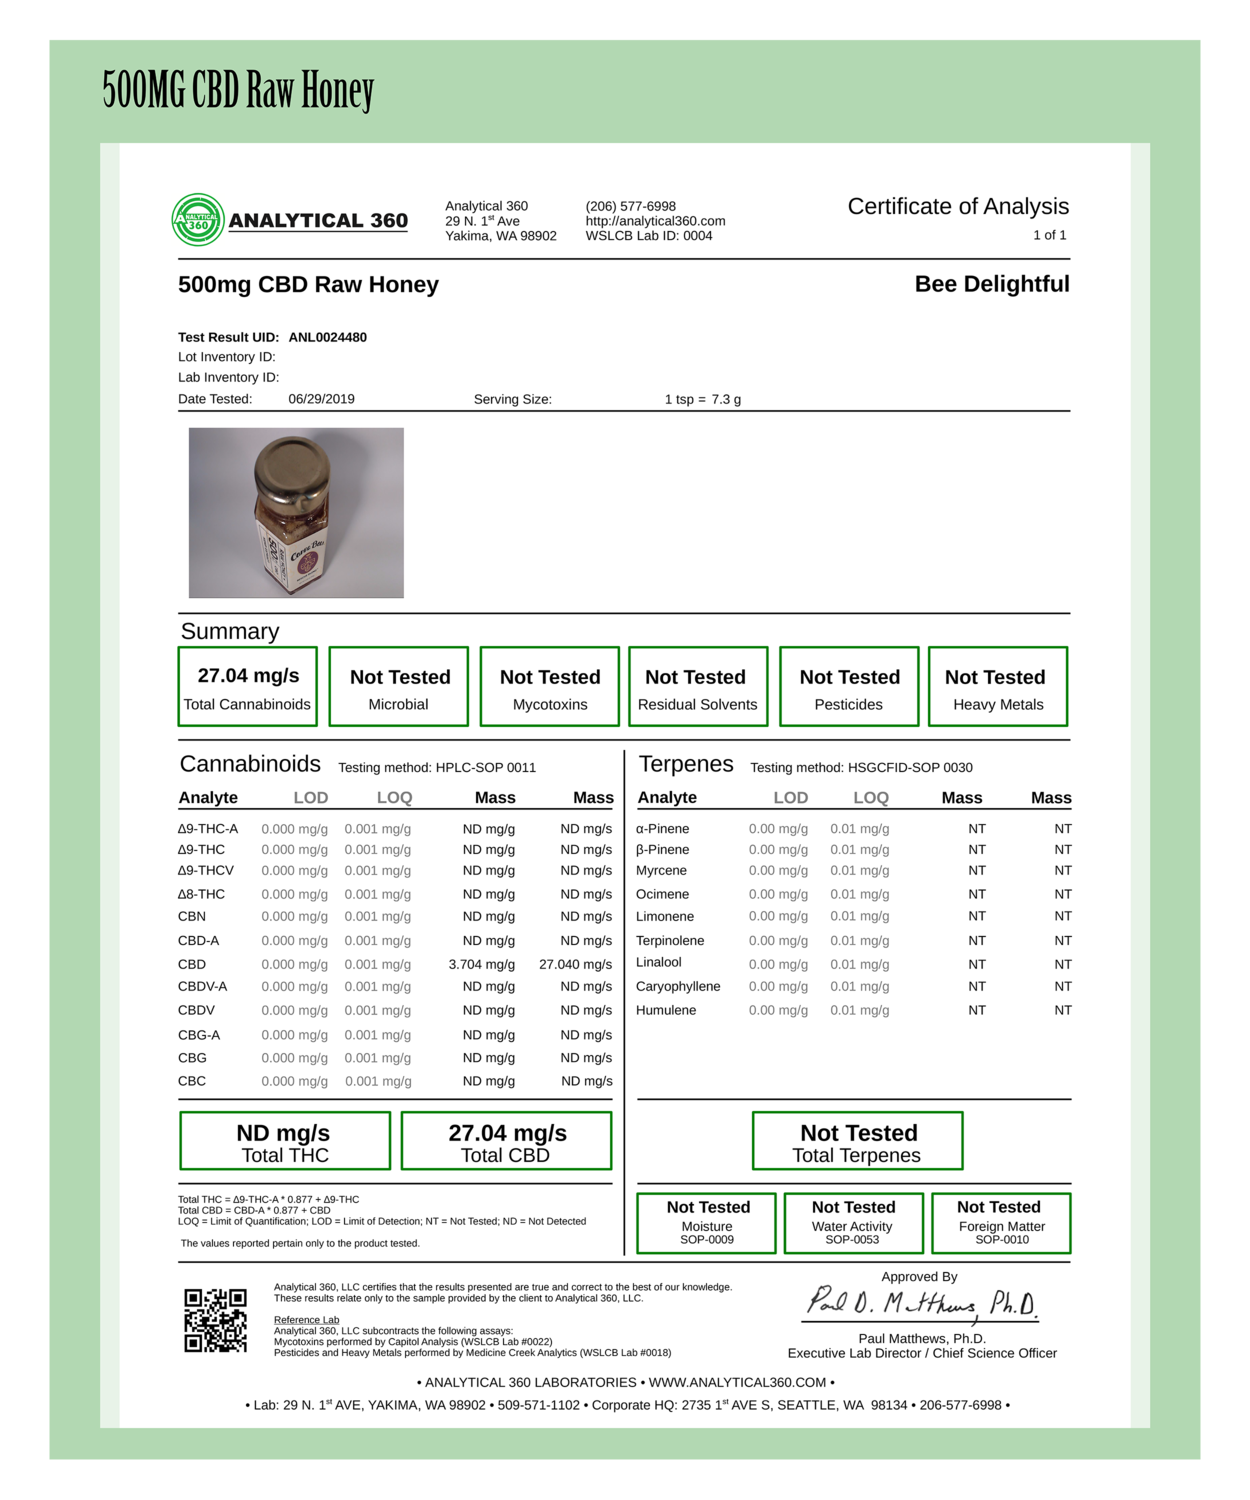 Texas Tonix - 500mg Rescue Blend (Raw Honey + CBD) Certificate of Analysis